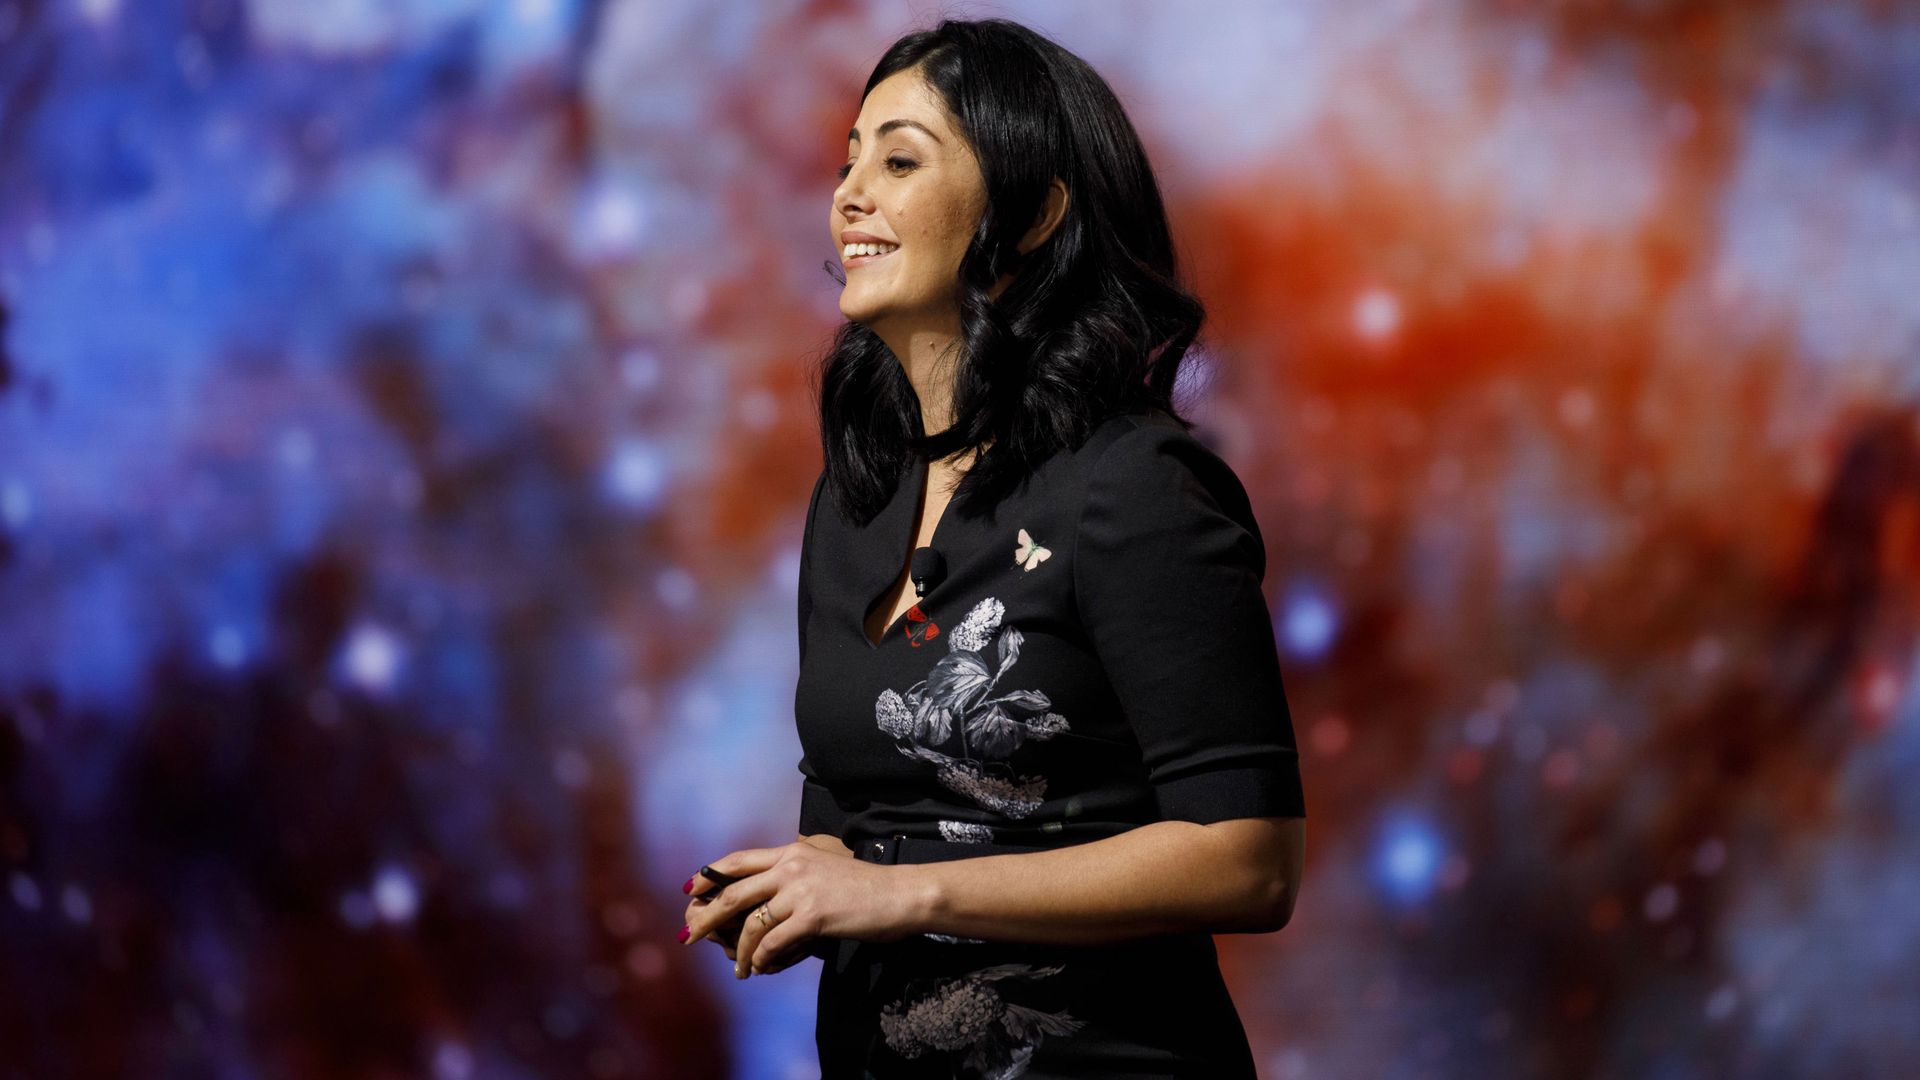 Diana Trujillo, Mars 2020 arm science surface phase lead at the NASA Jet Propulsion Laboratory.